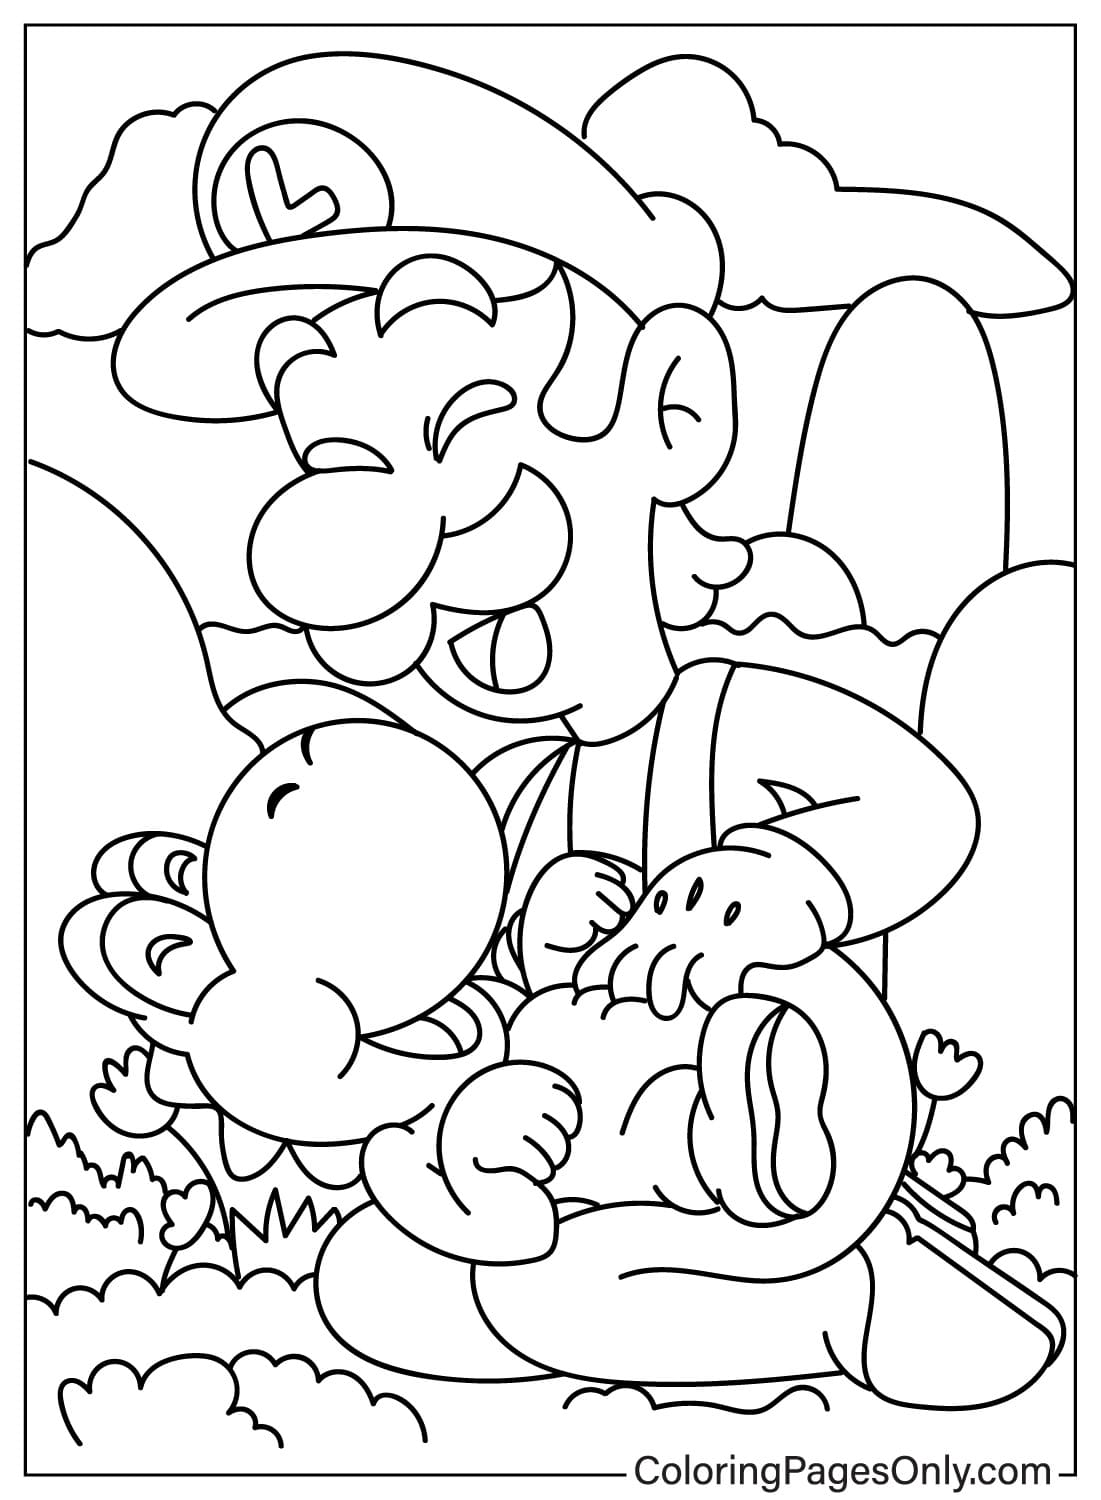 Desenho para colorir de Yoshi e Luigi